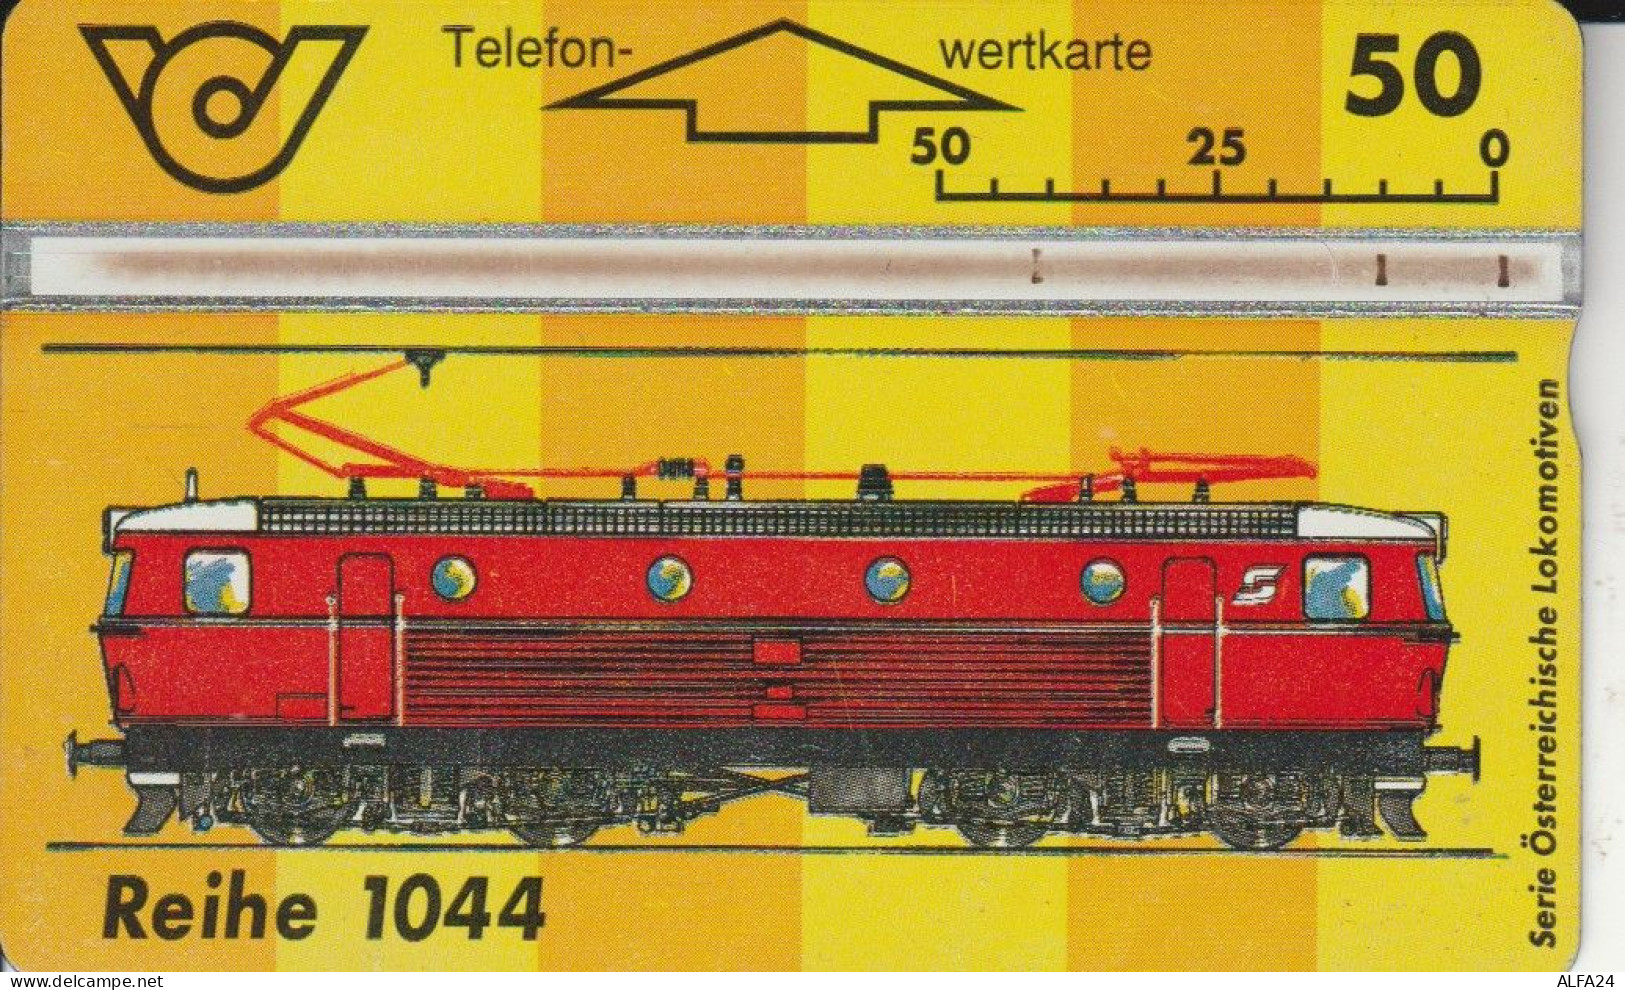 PHONE CARD AUSTRIA (CK6201 - Austria